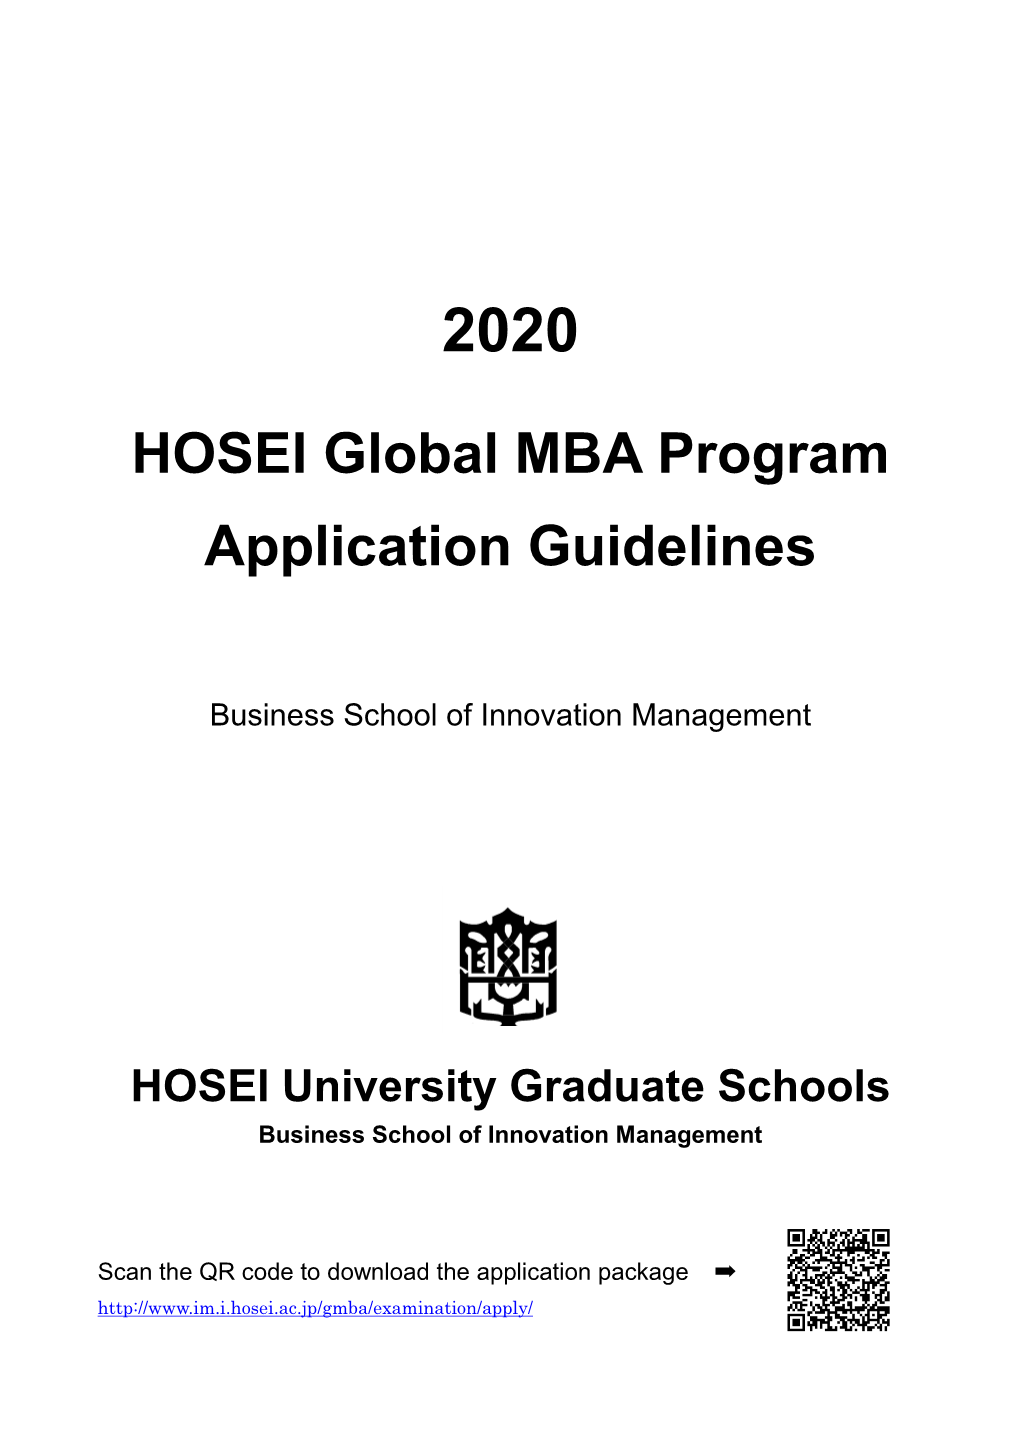 HOSEI Global MBA Program Application Guidelines